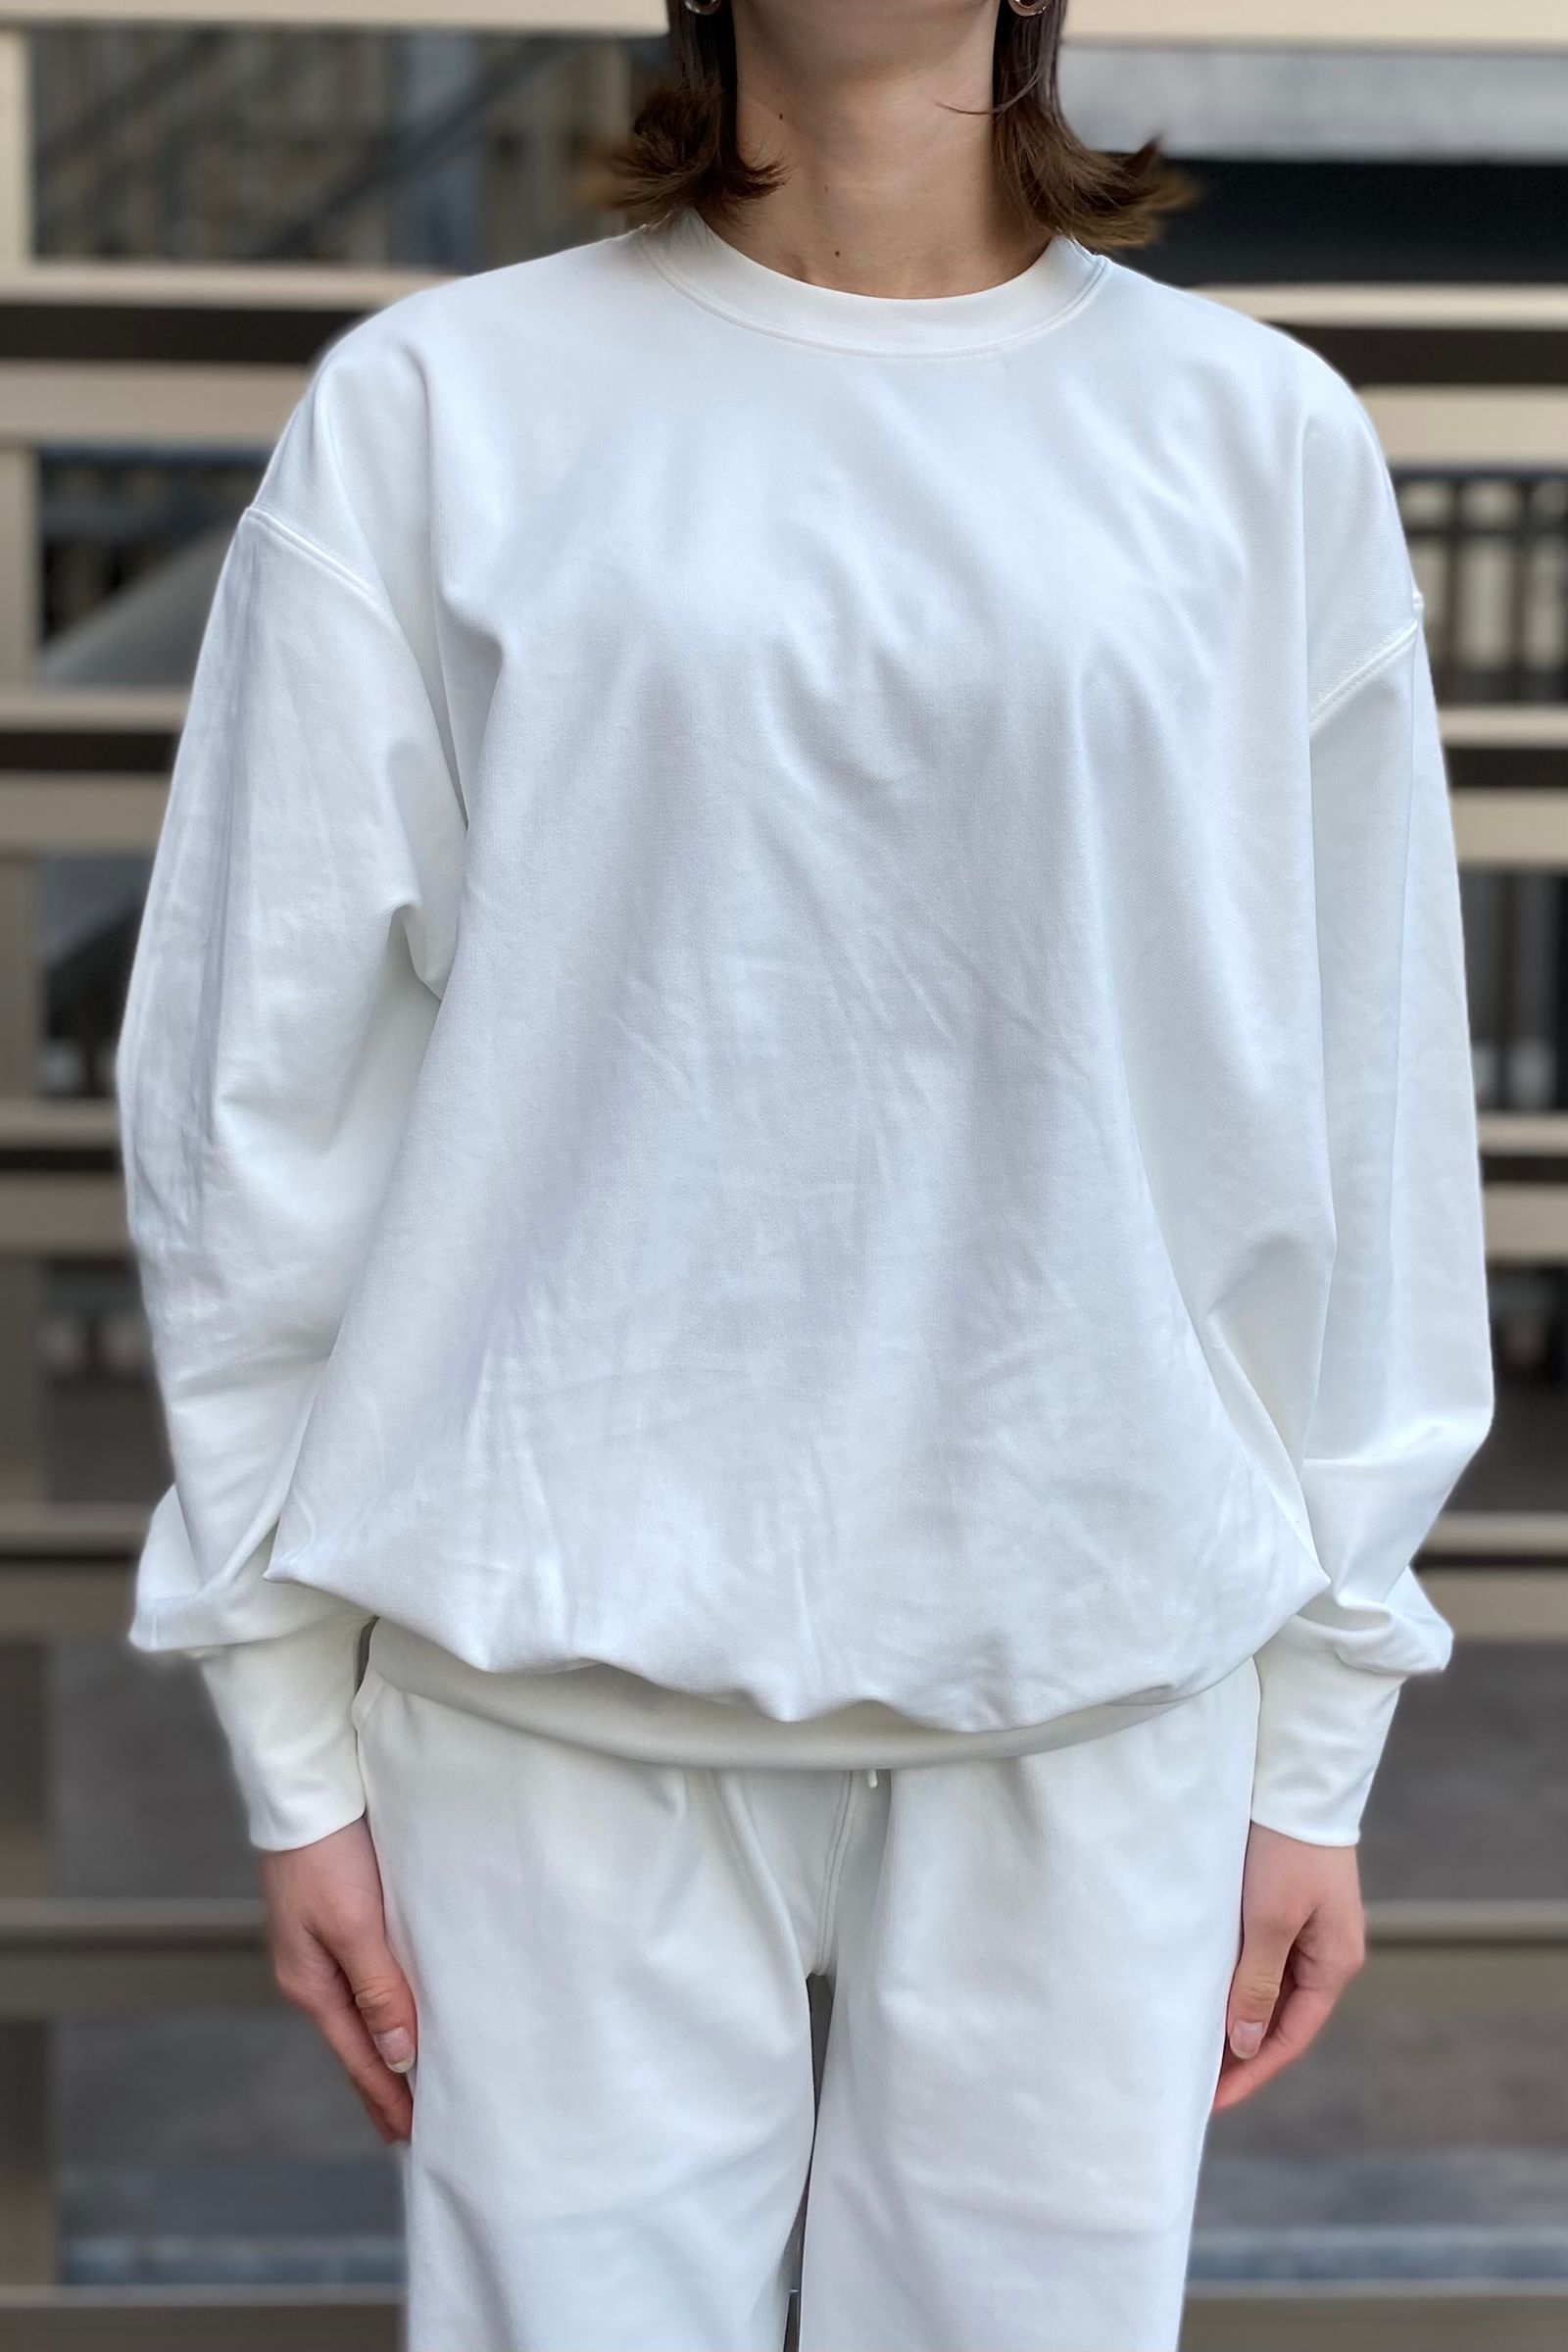 DAIWA PIER39 - w's tech flex jersey crew -white- 23ss women | asterisk